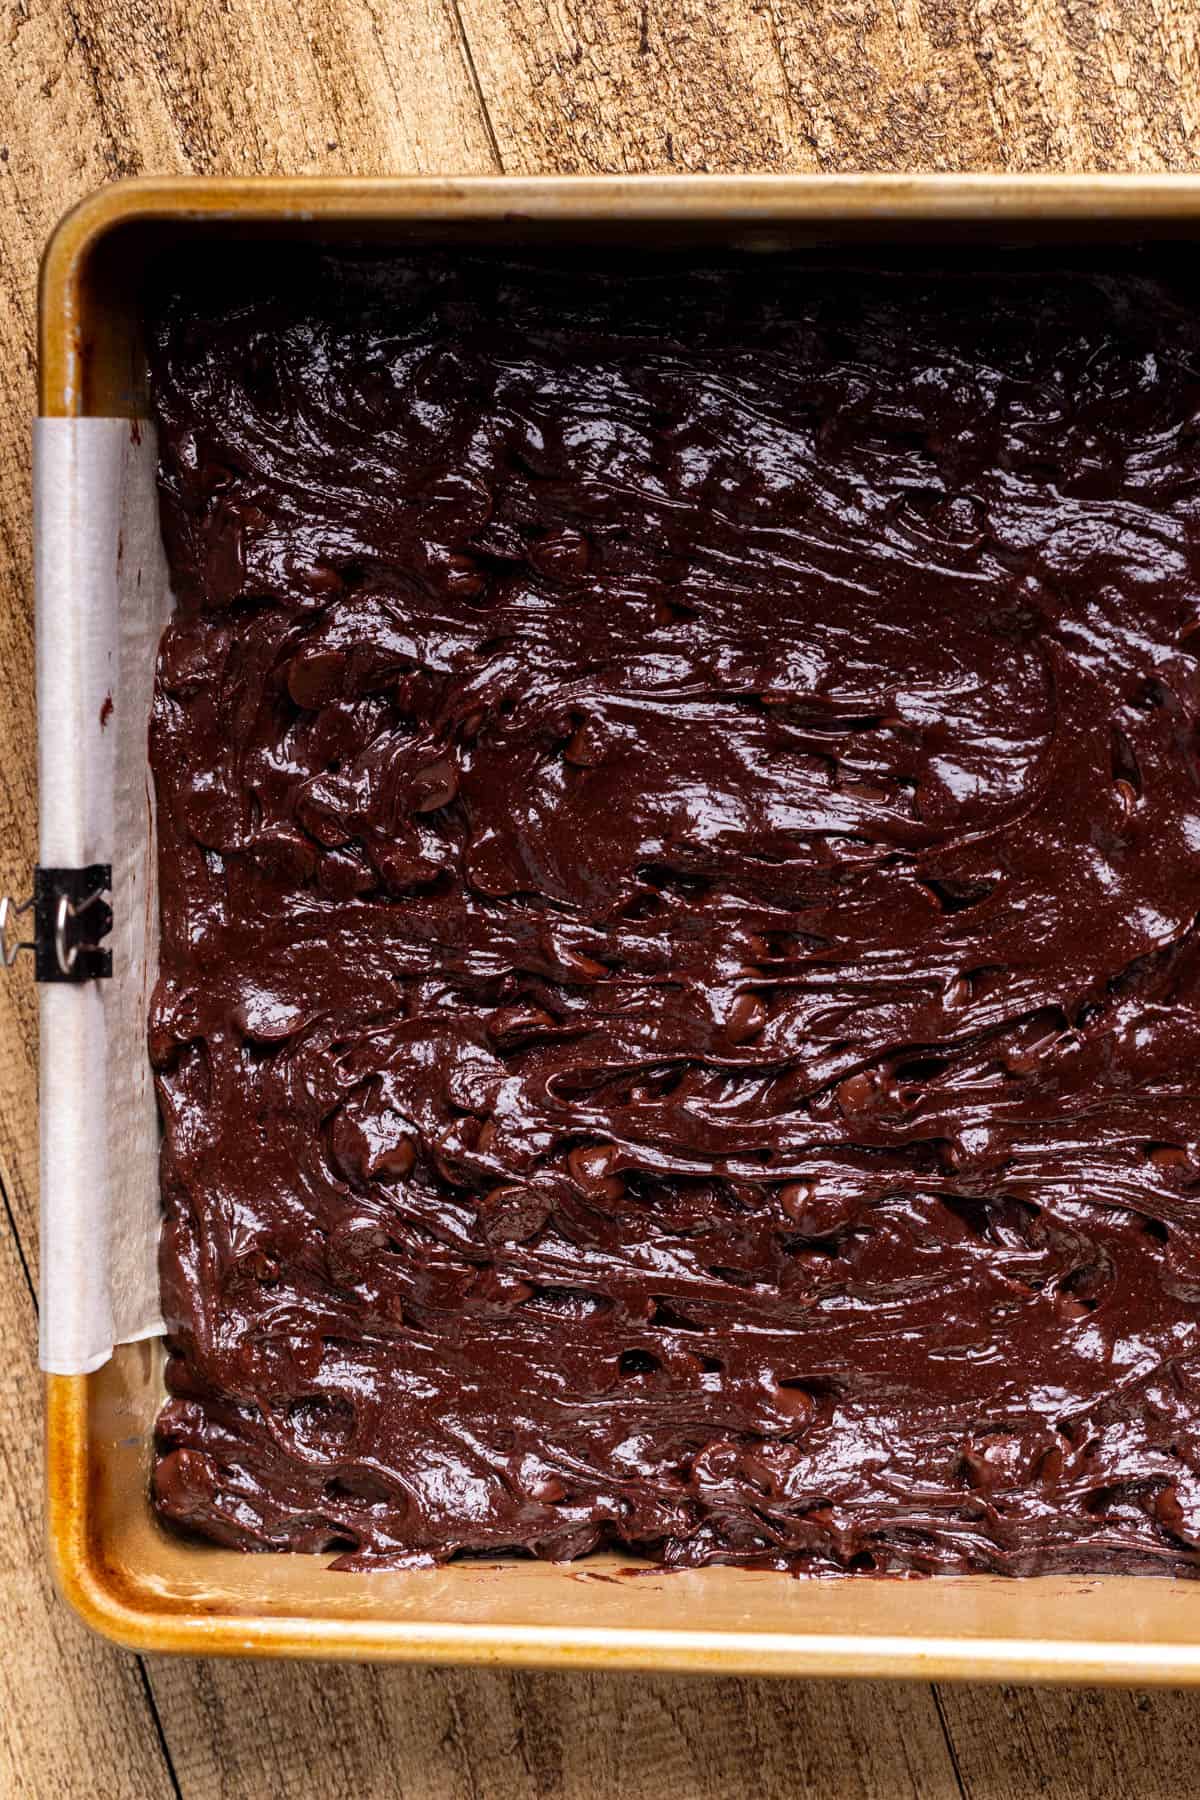 Brownie batter in the pan.